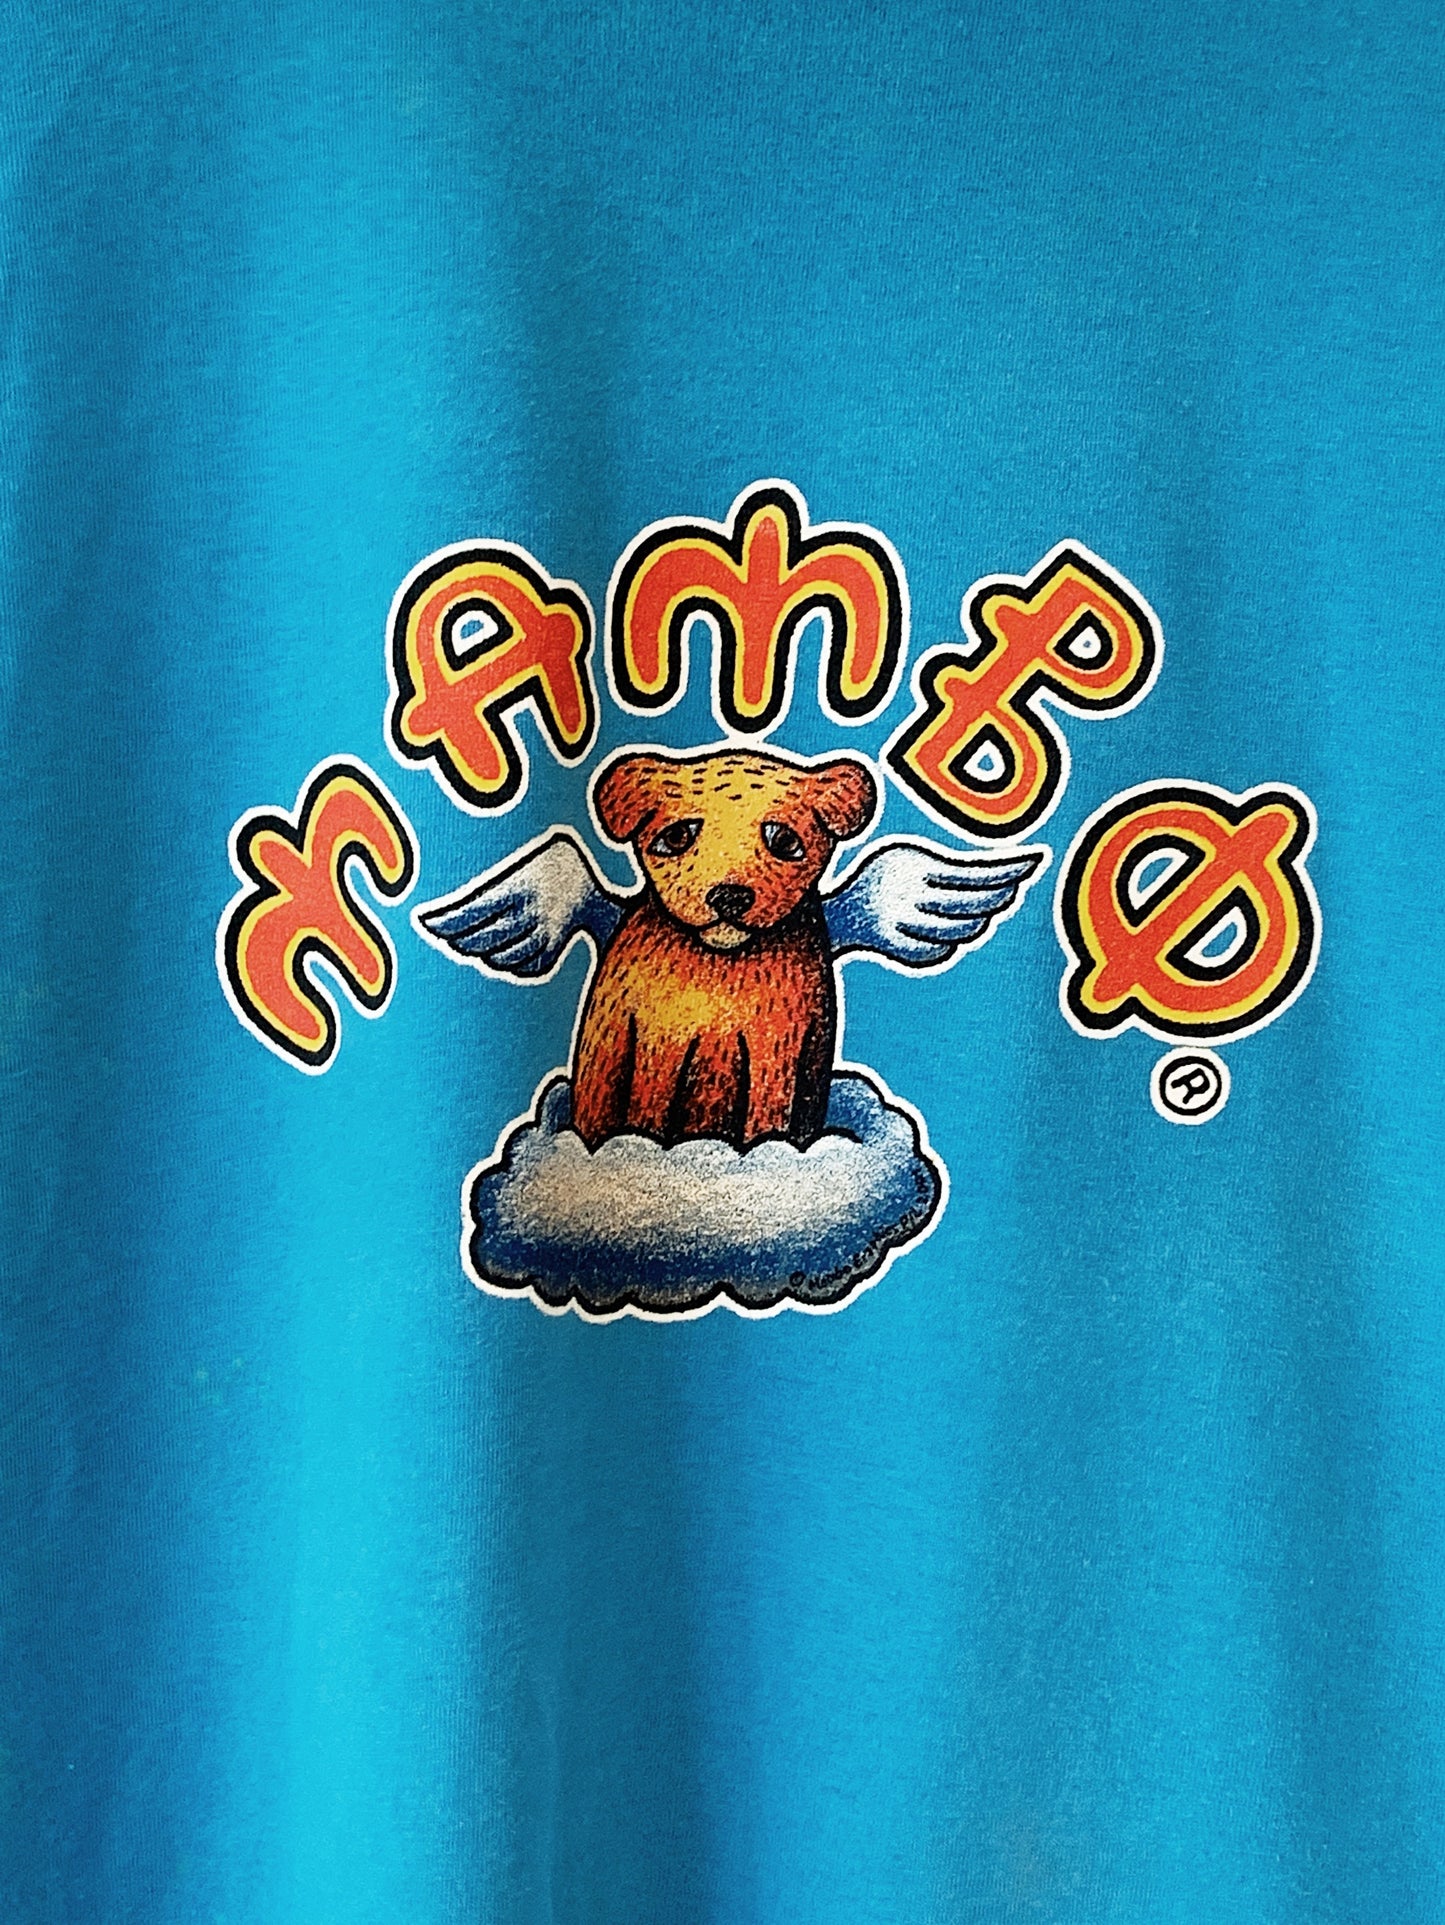 Vintage Reg Mombassa for Mambo "Puppies" '01 T-Shirt